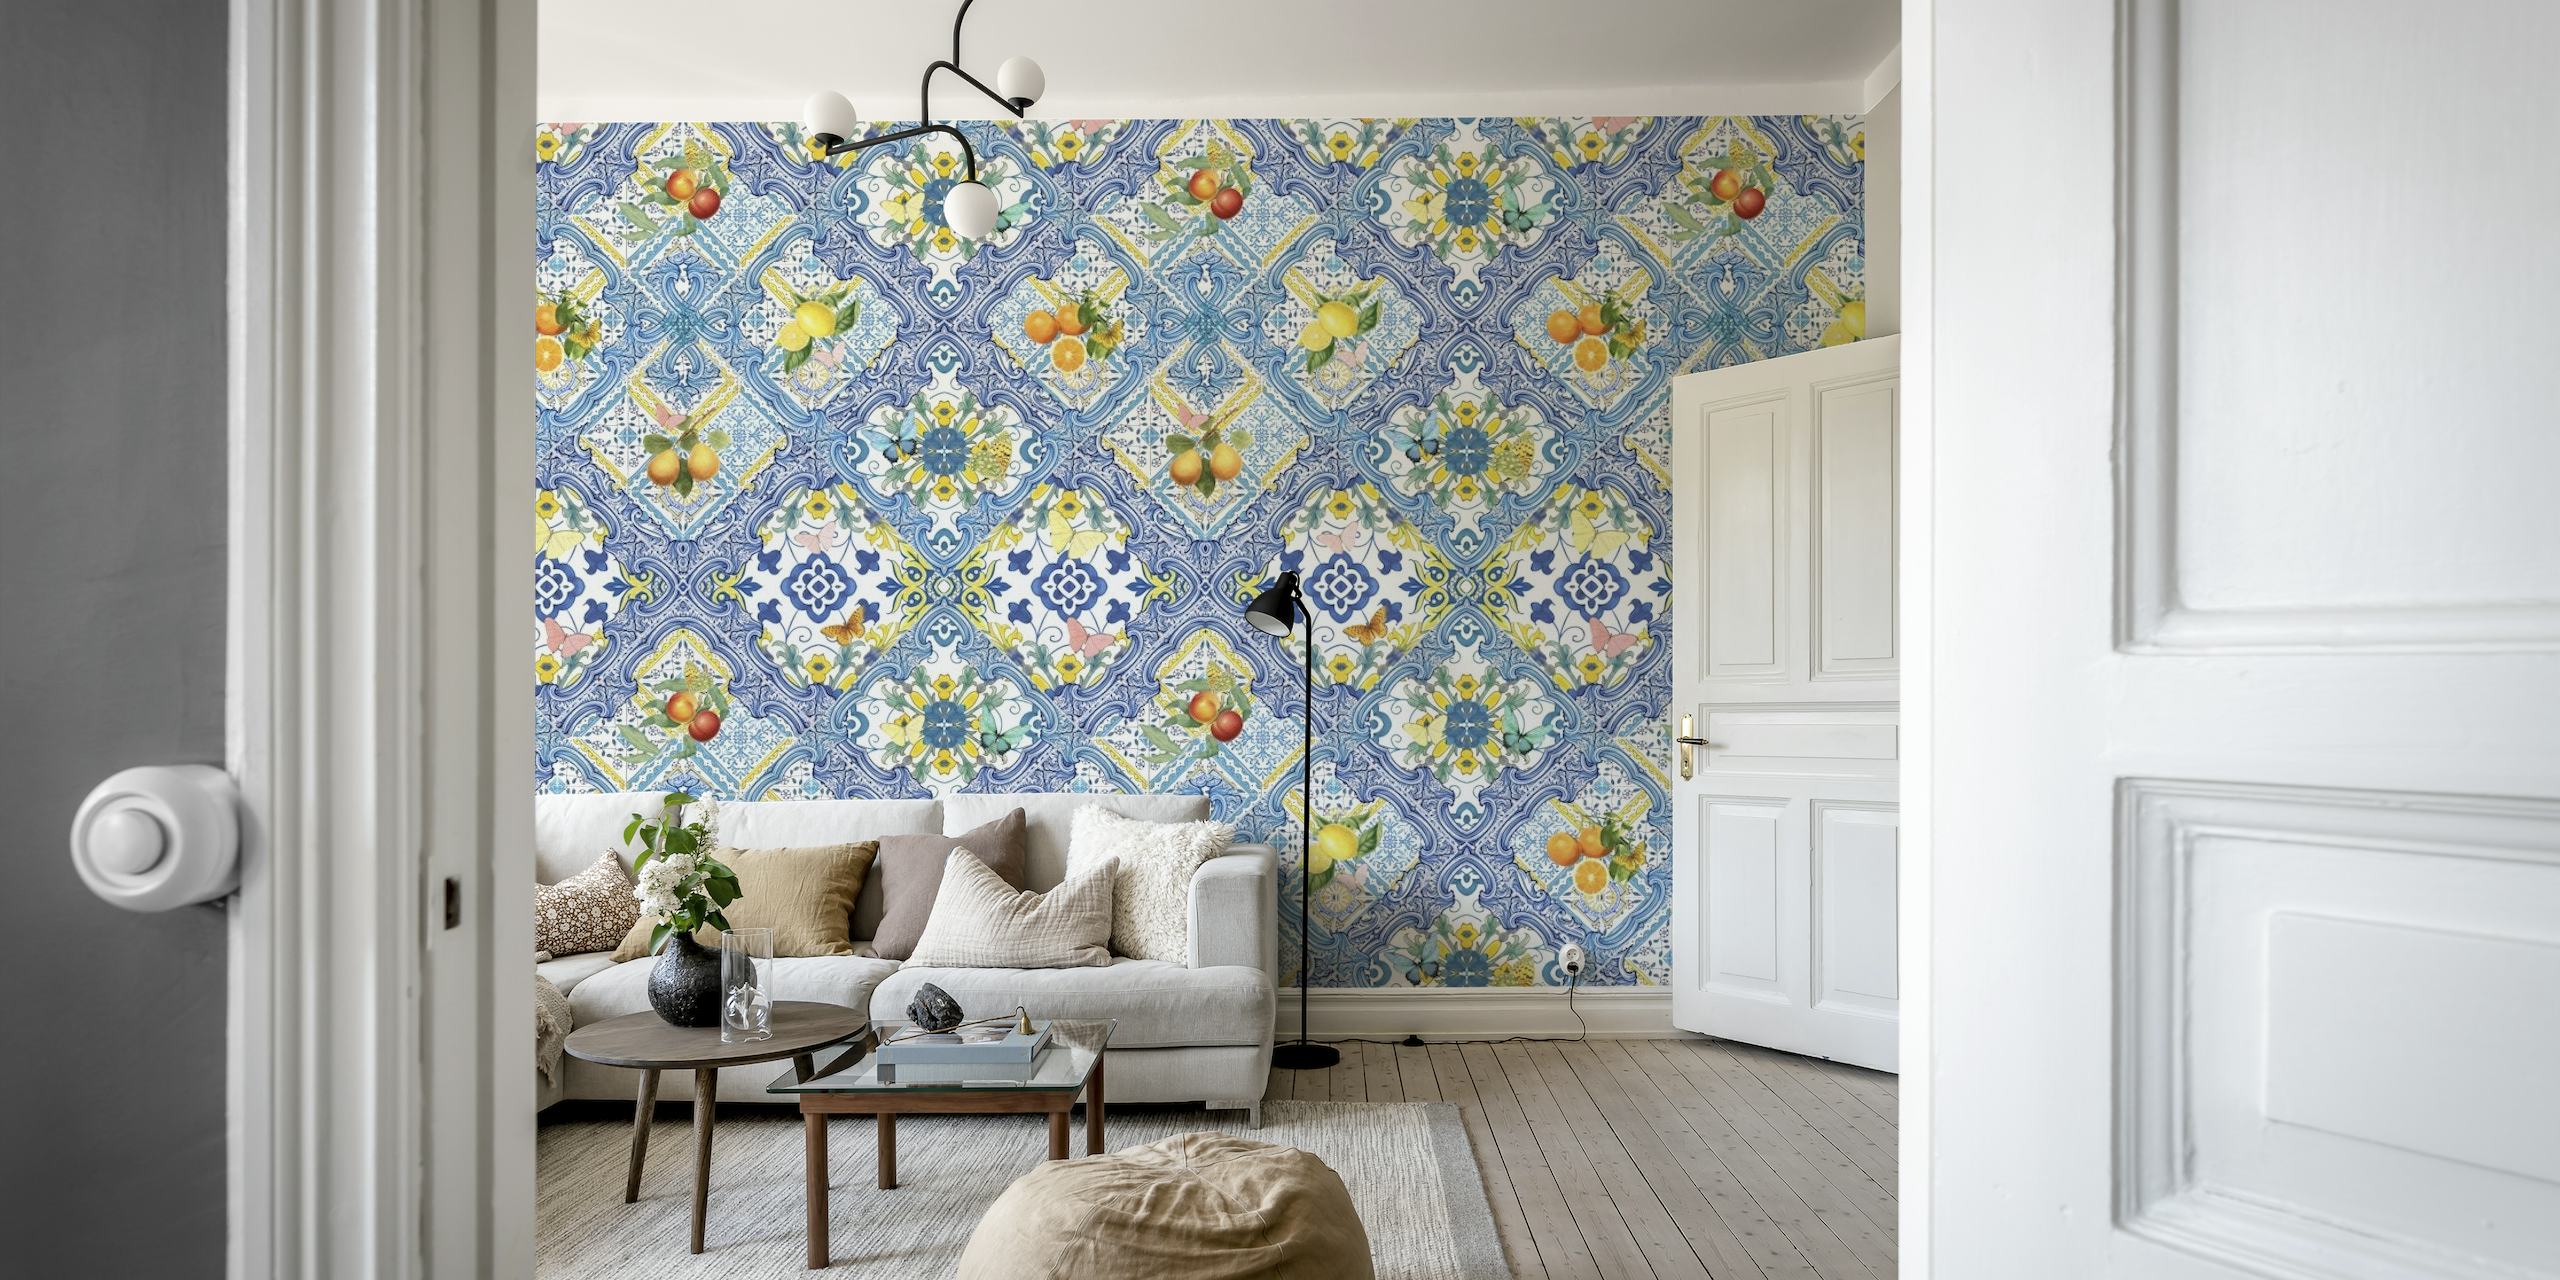 Mediterranean tiles and citrus fruit behang